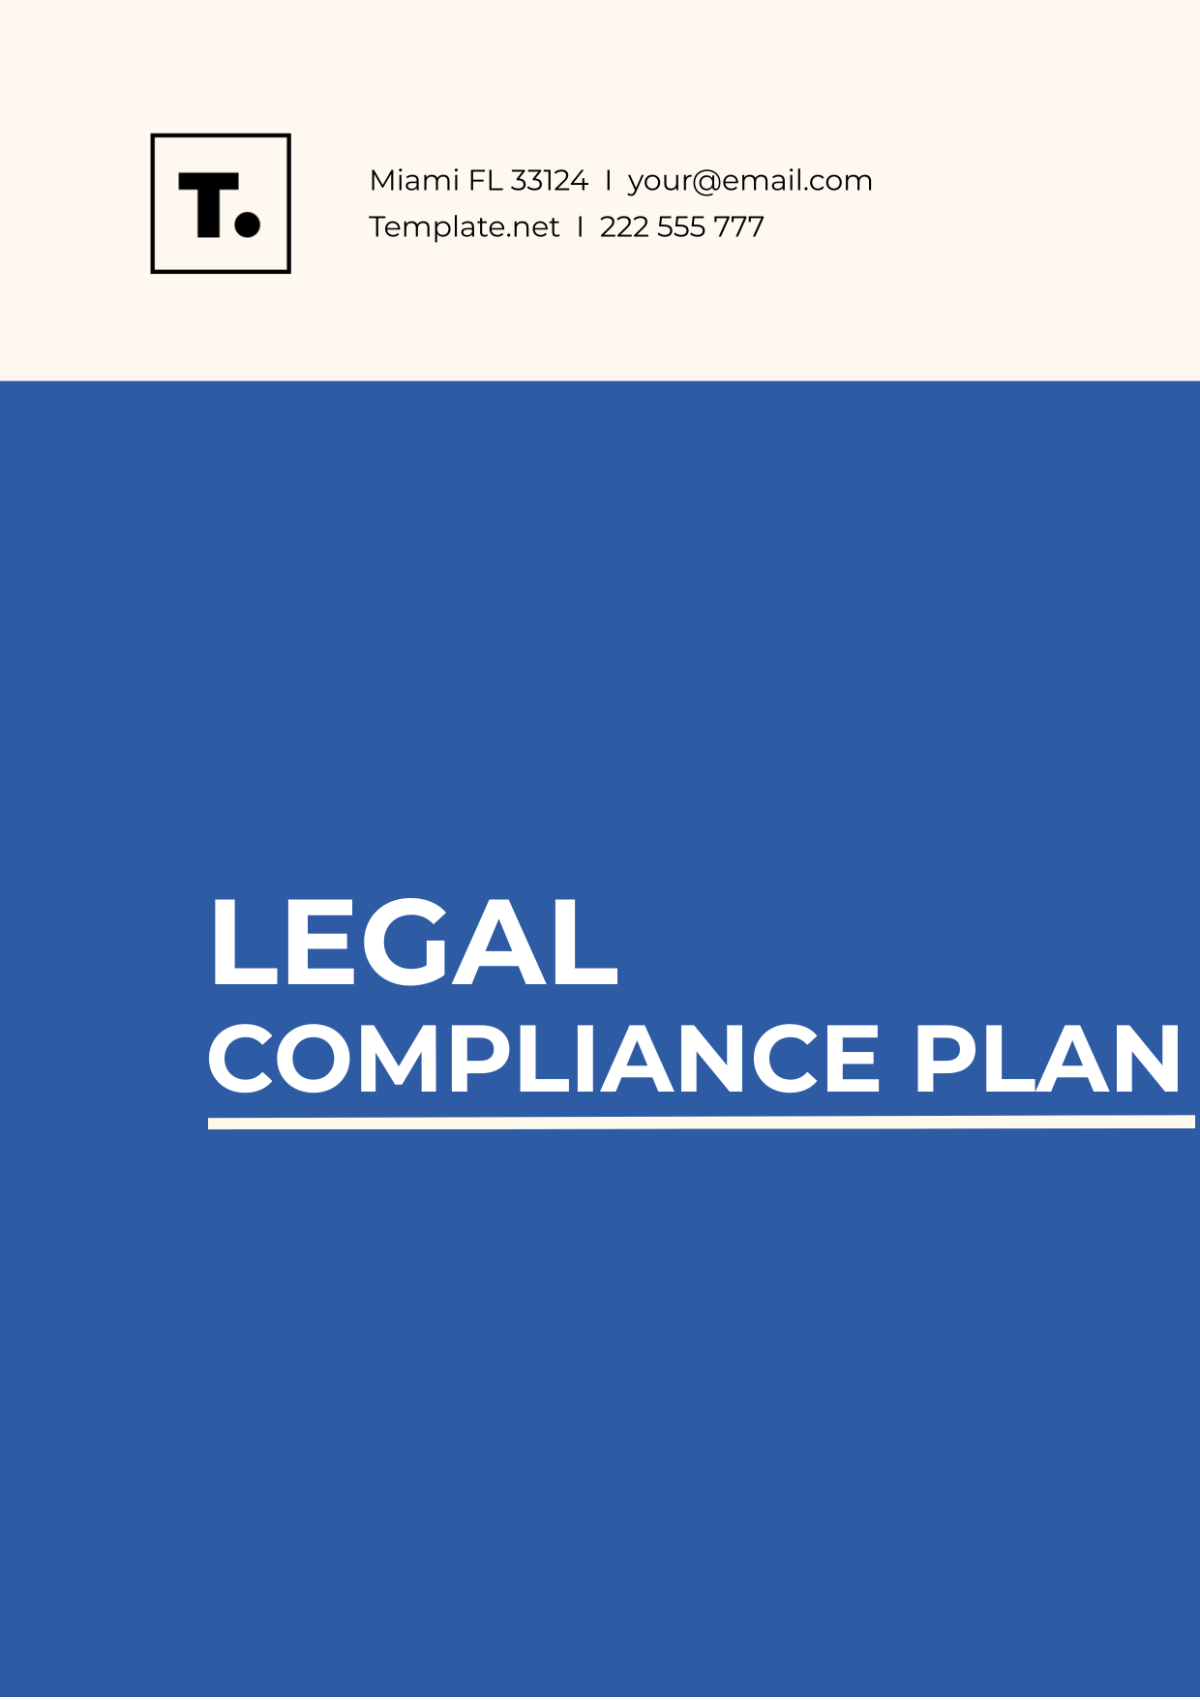 Legal Compliance Plan Template